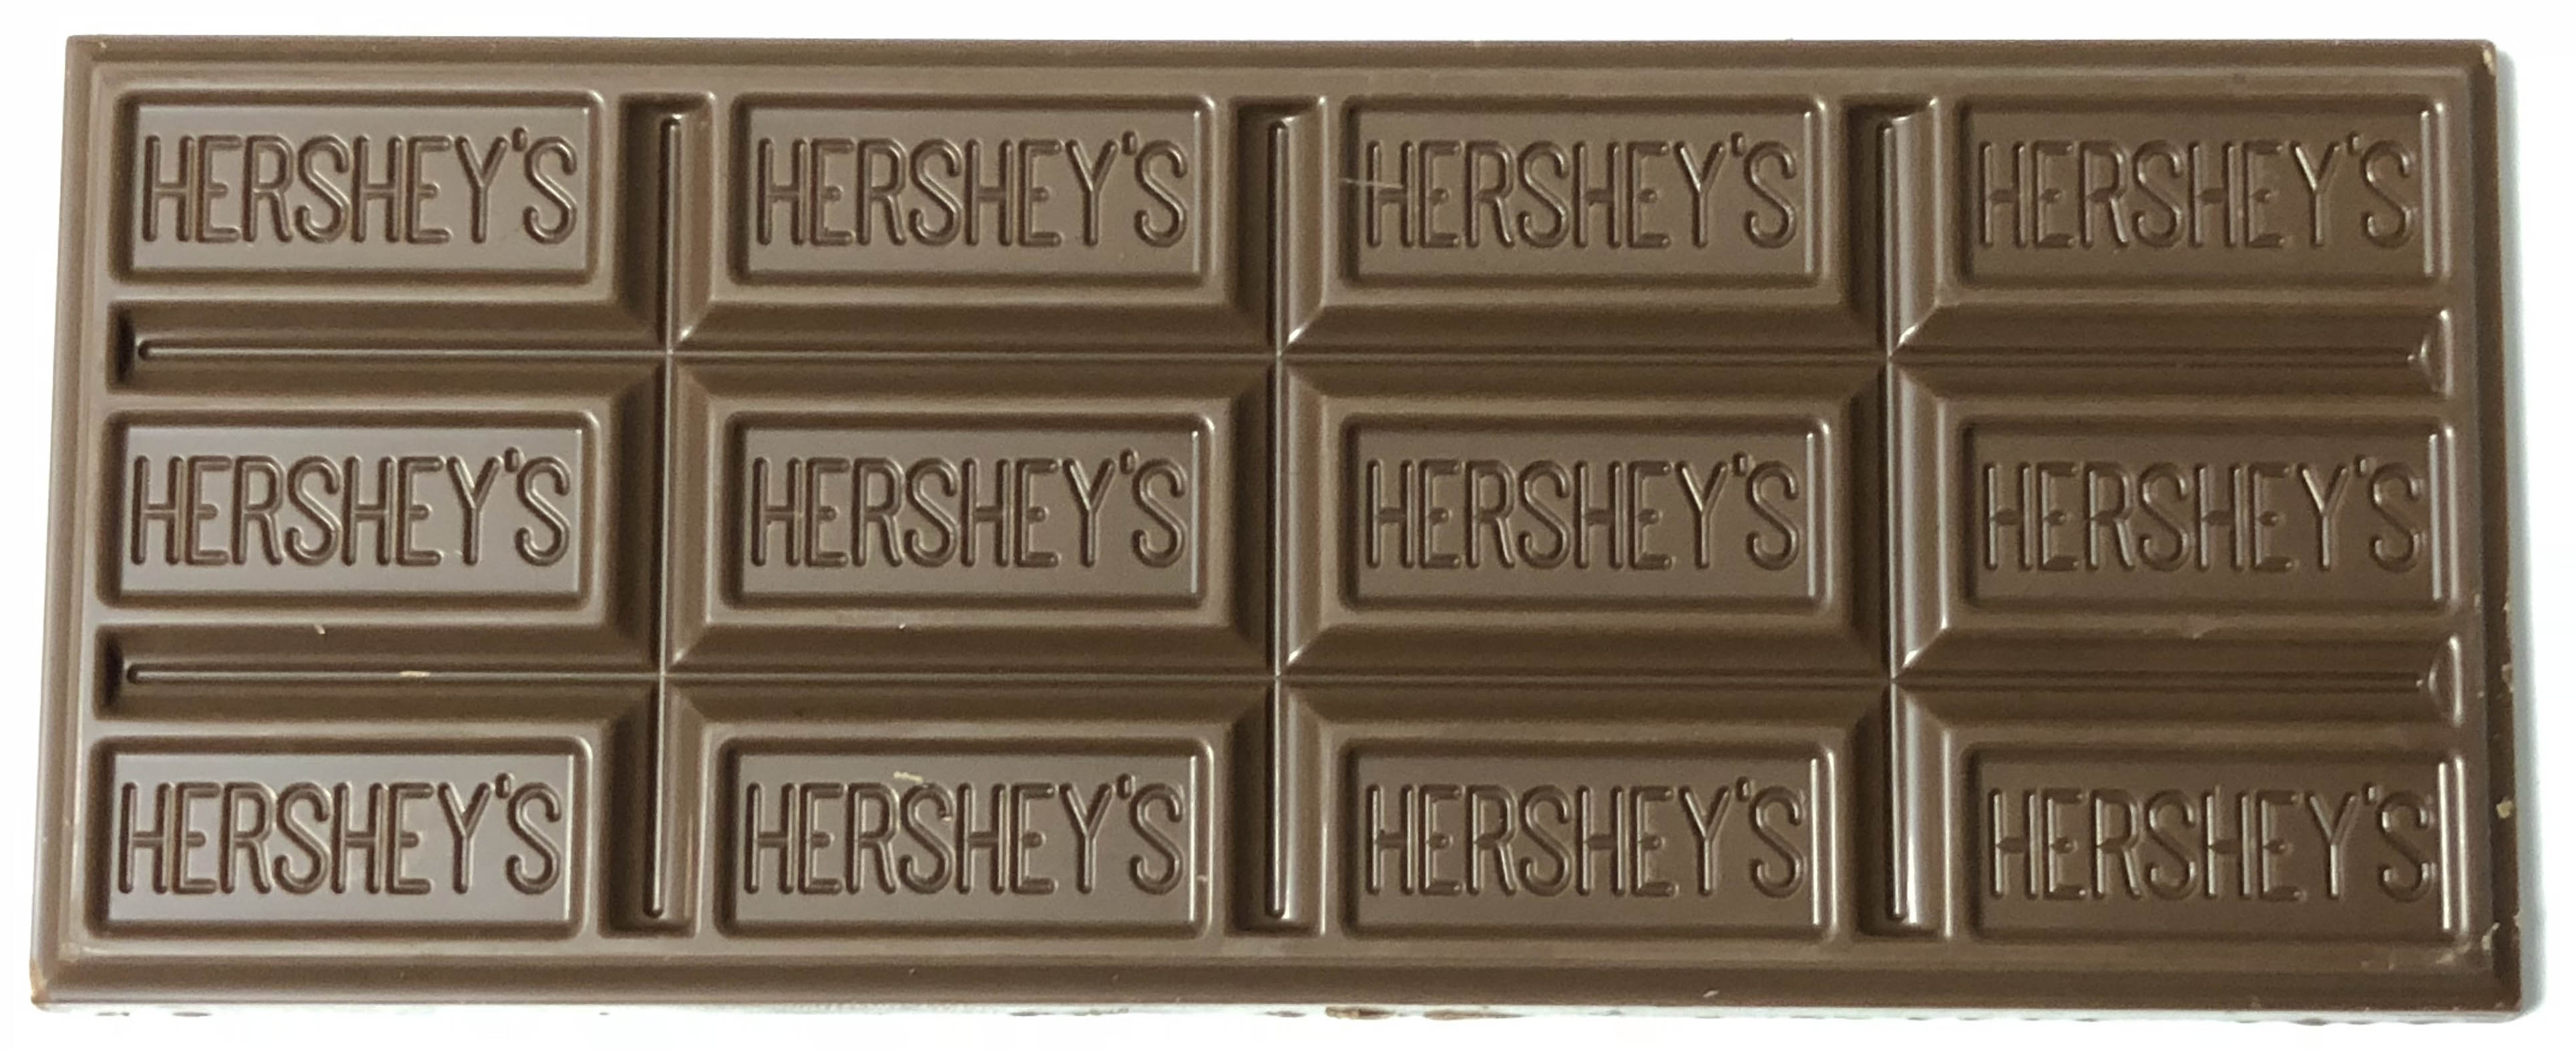 Hershey_chocolate_bar.jpg